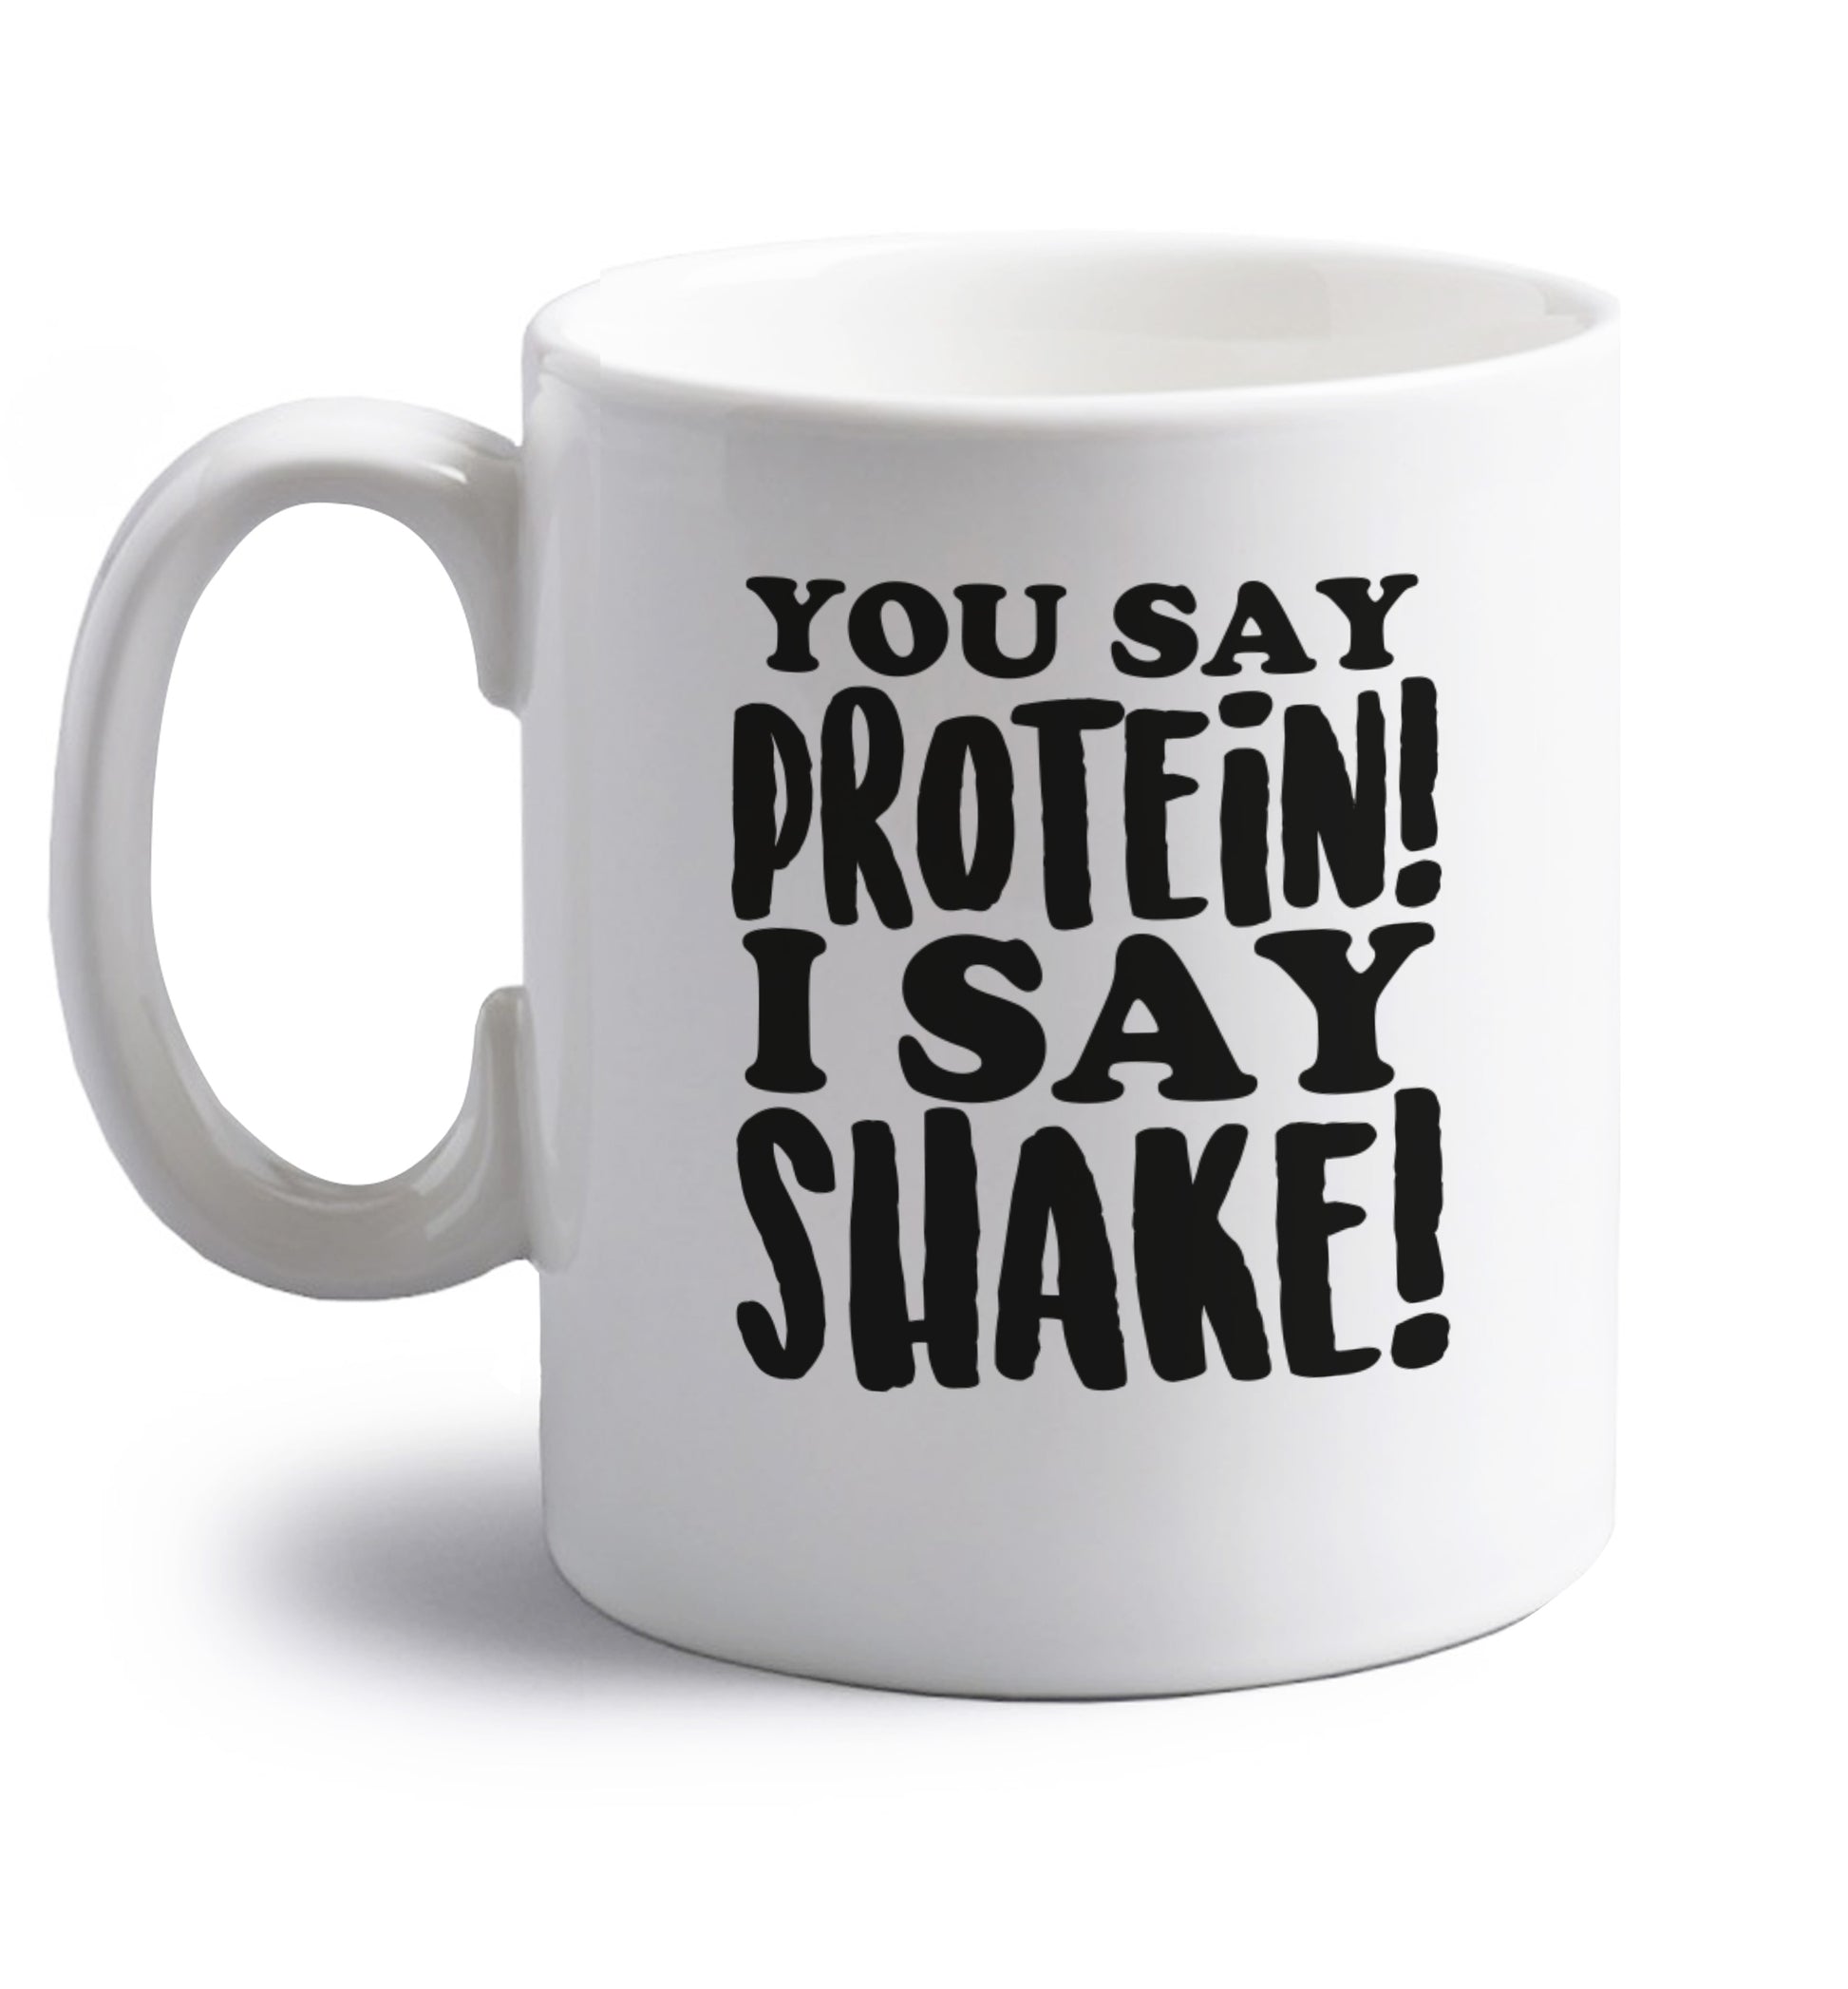 You say protein I say shake! right handed white ceramic mug 